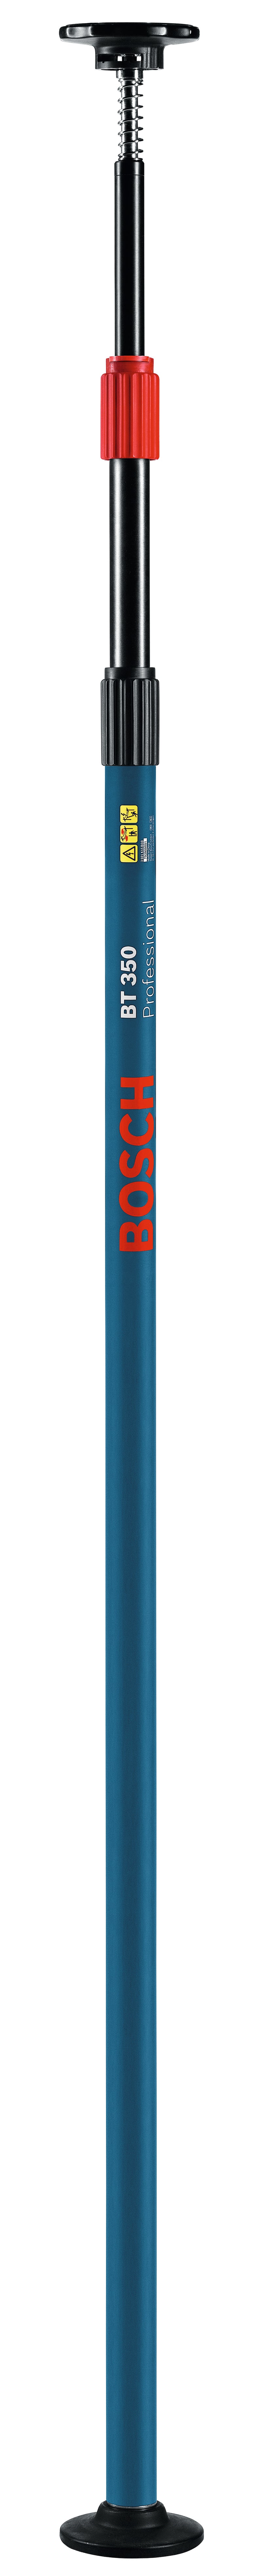 Telescopic Pole BT 350